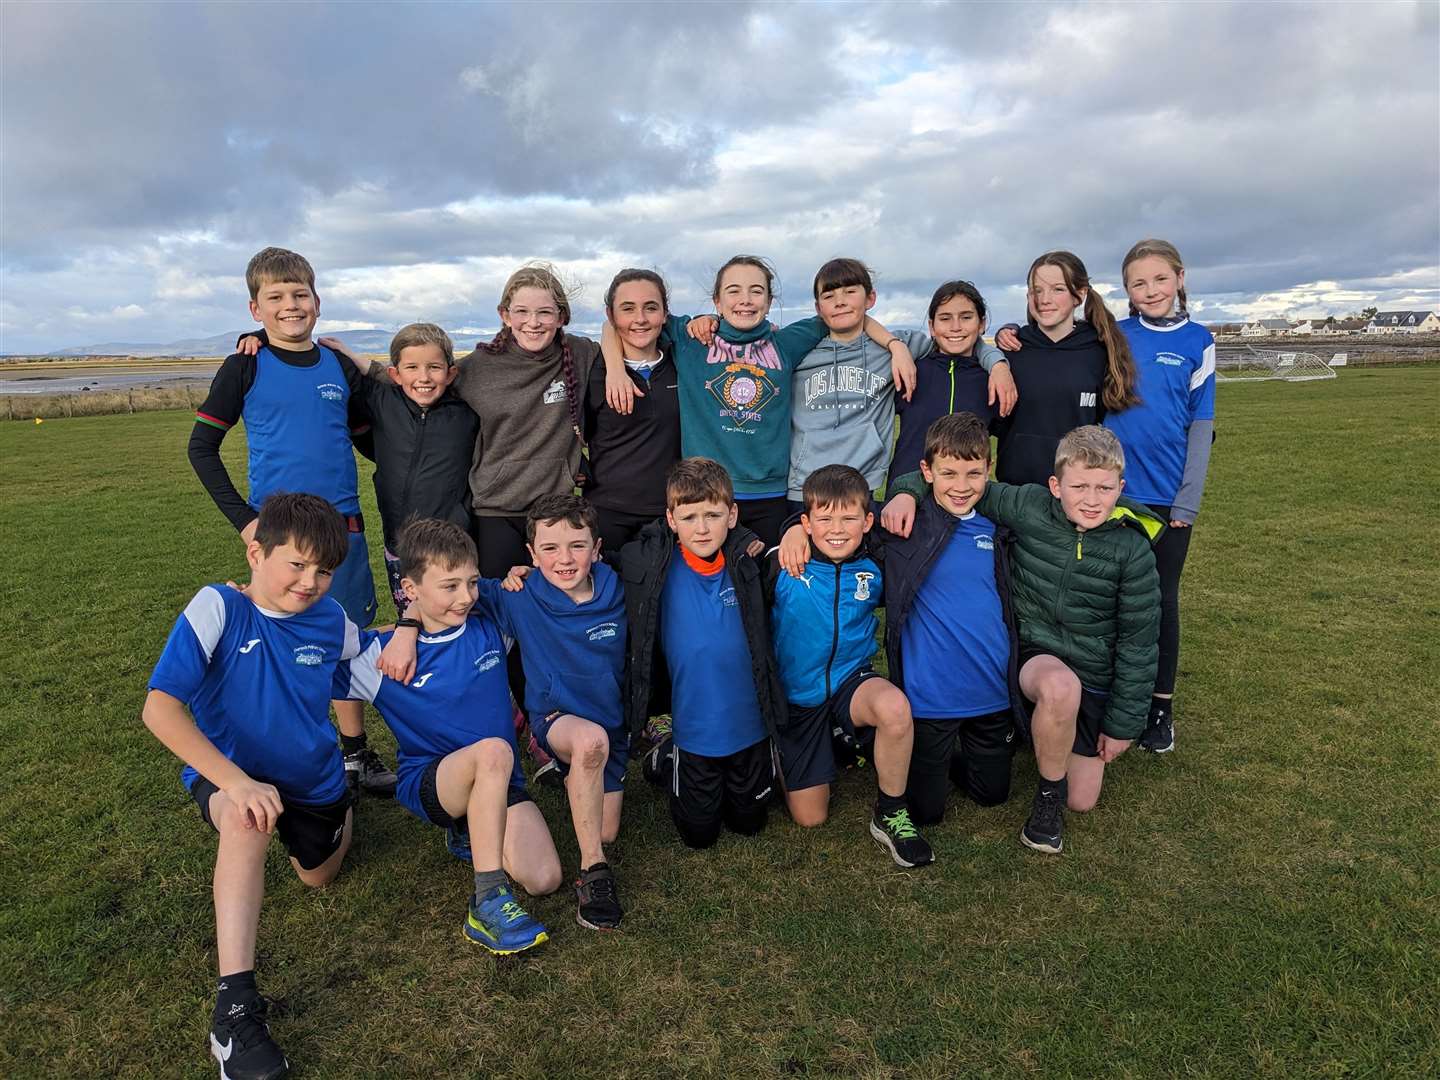 Dornoch Primary School's cross country team.